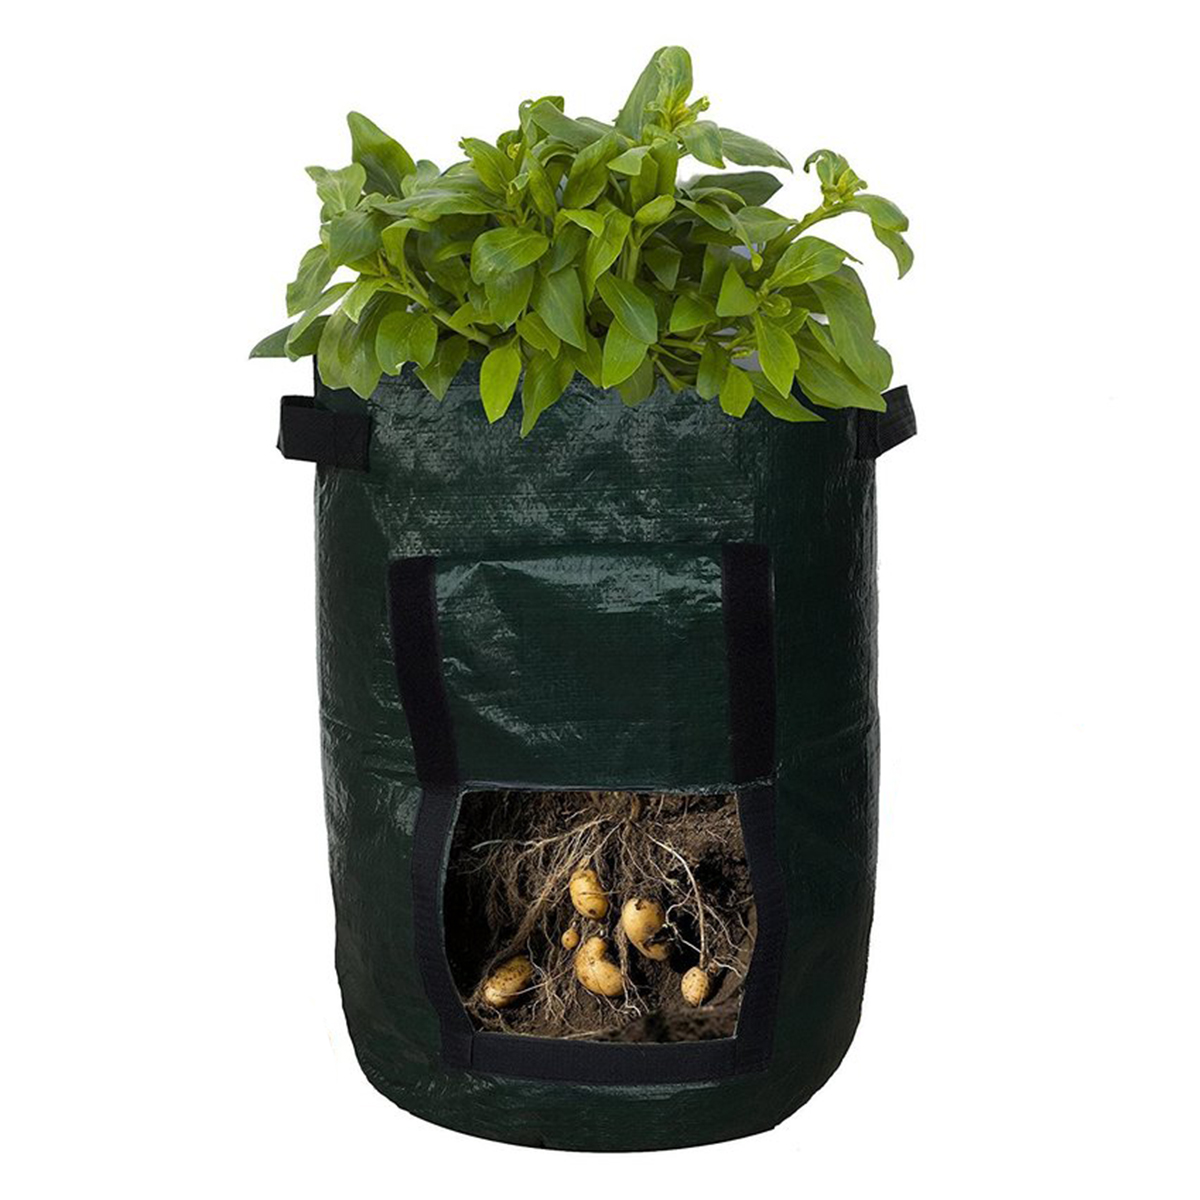 Potato Planting Bag Planter Grow Bag Growing Pot Vegetable Container